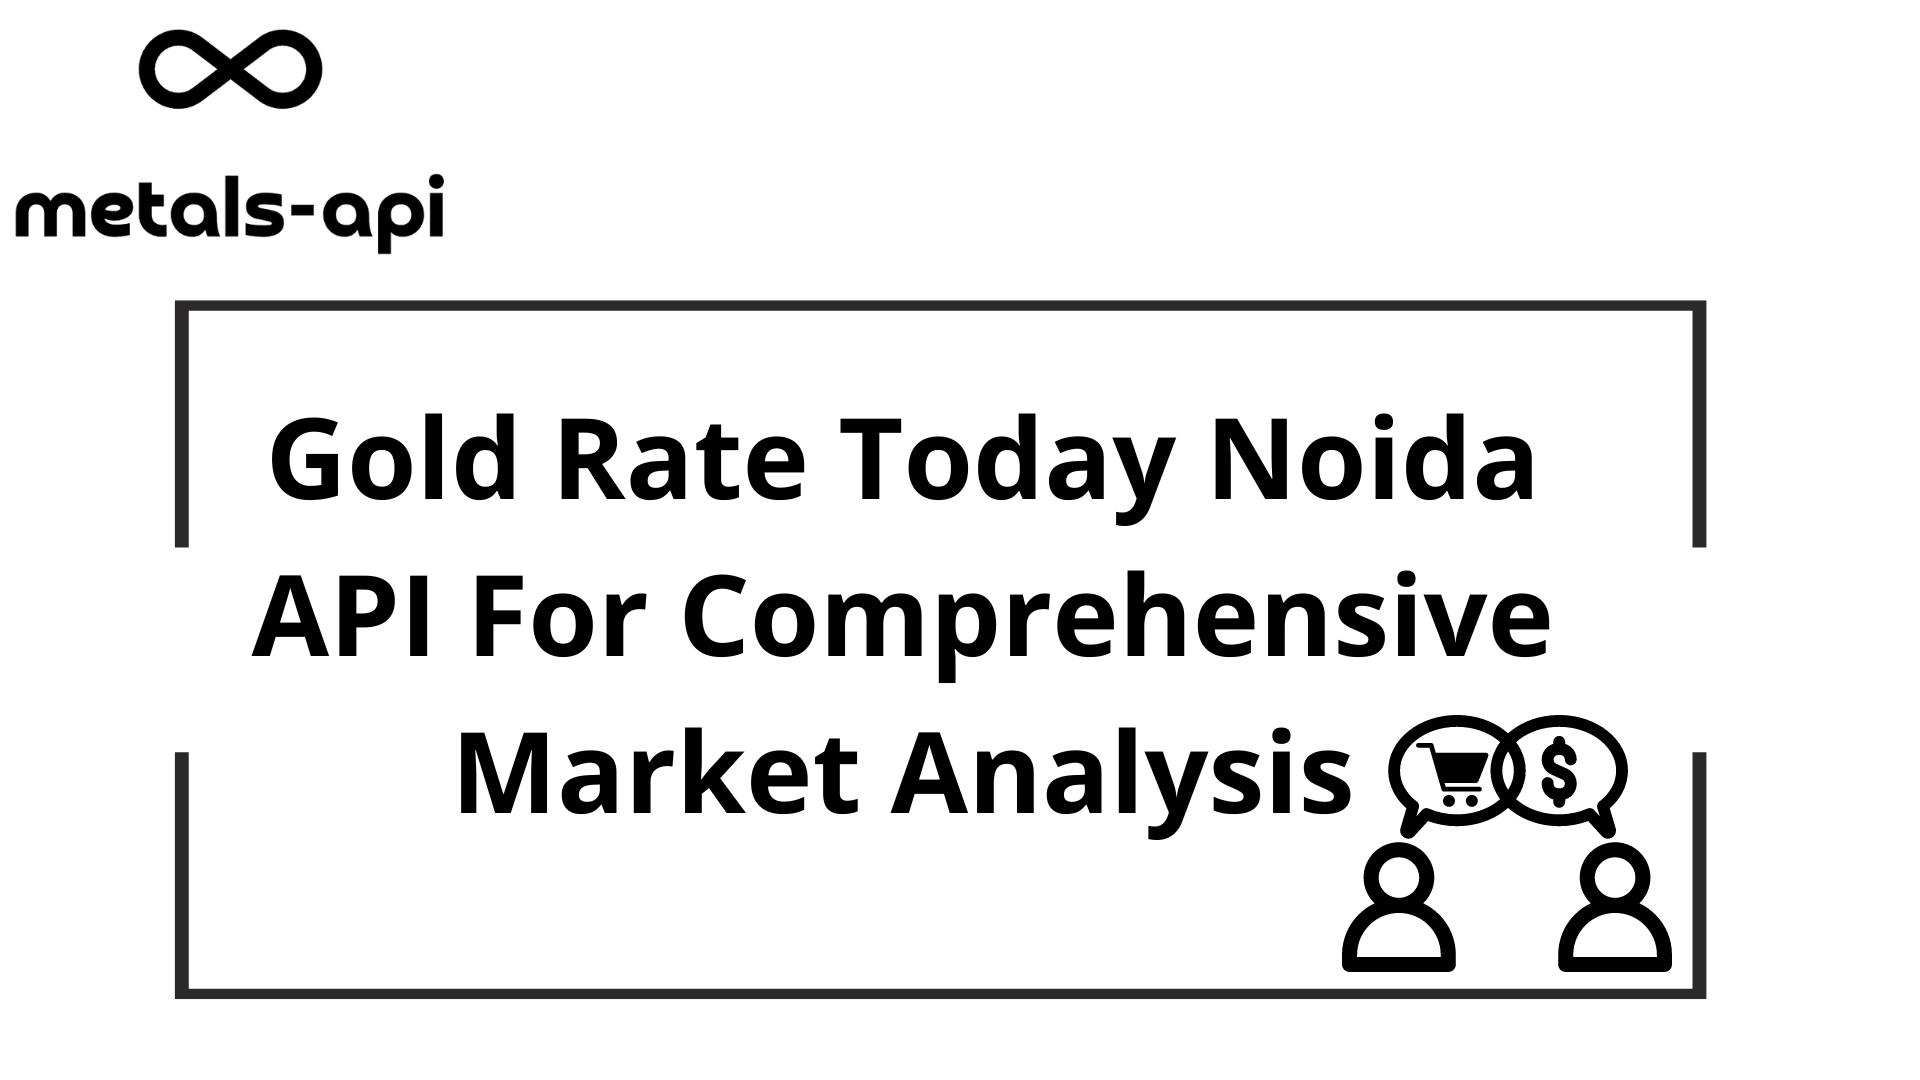 Gold Rate Today Noida API For Comprehensive Market Analysis